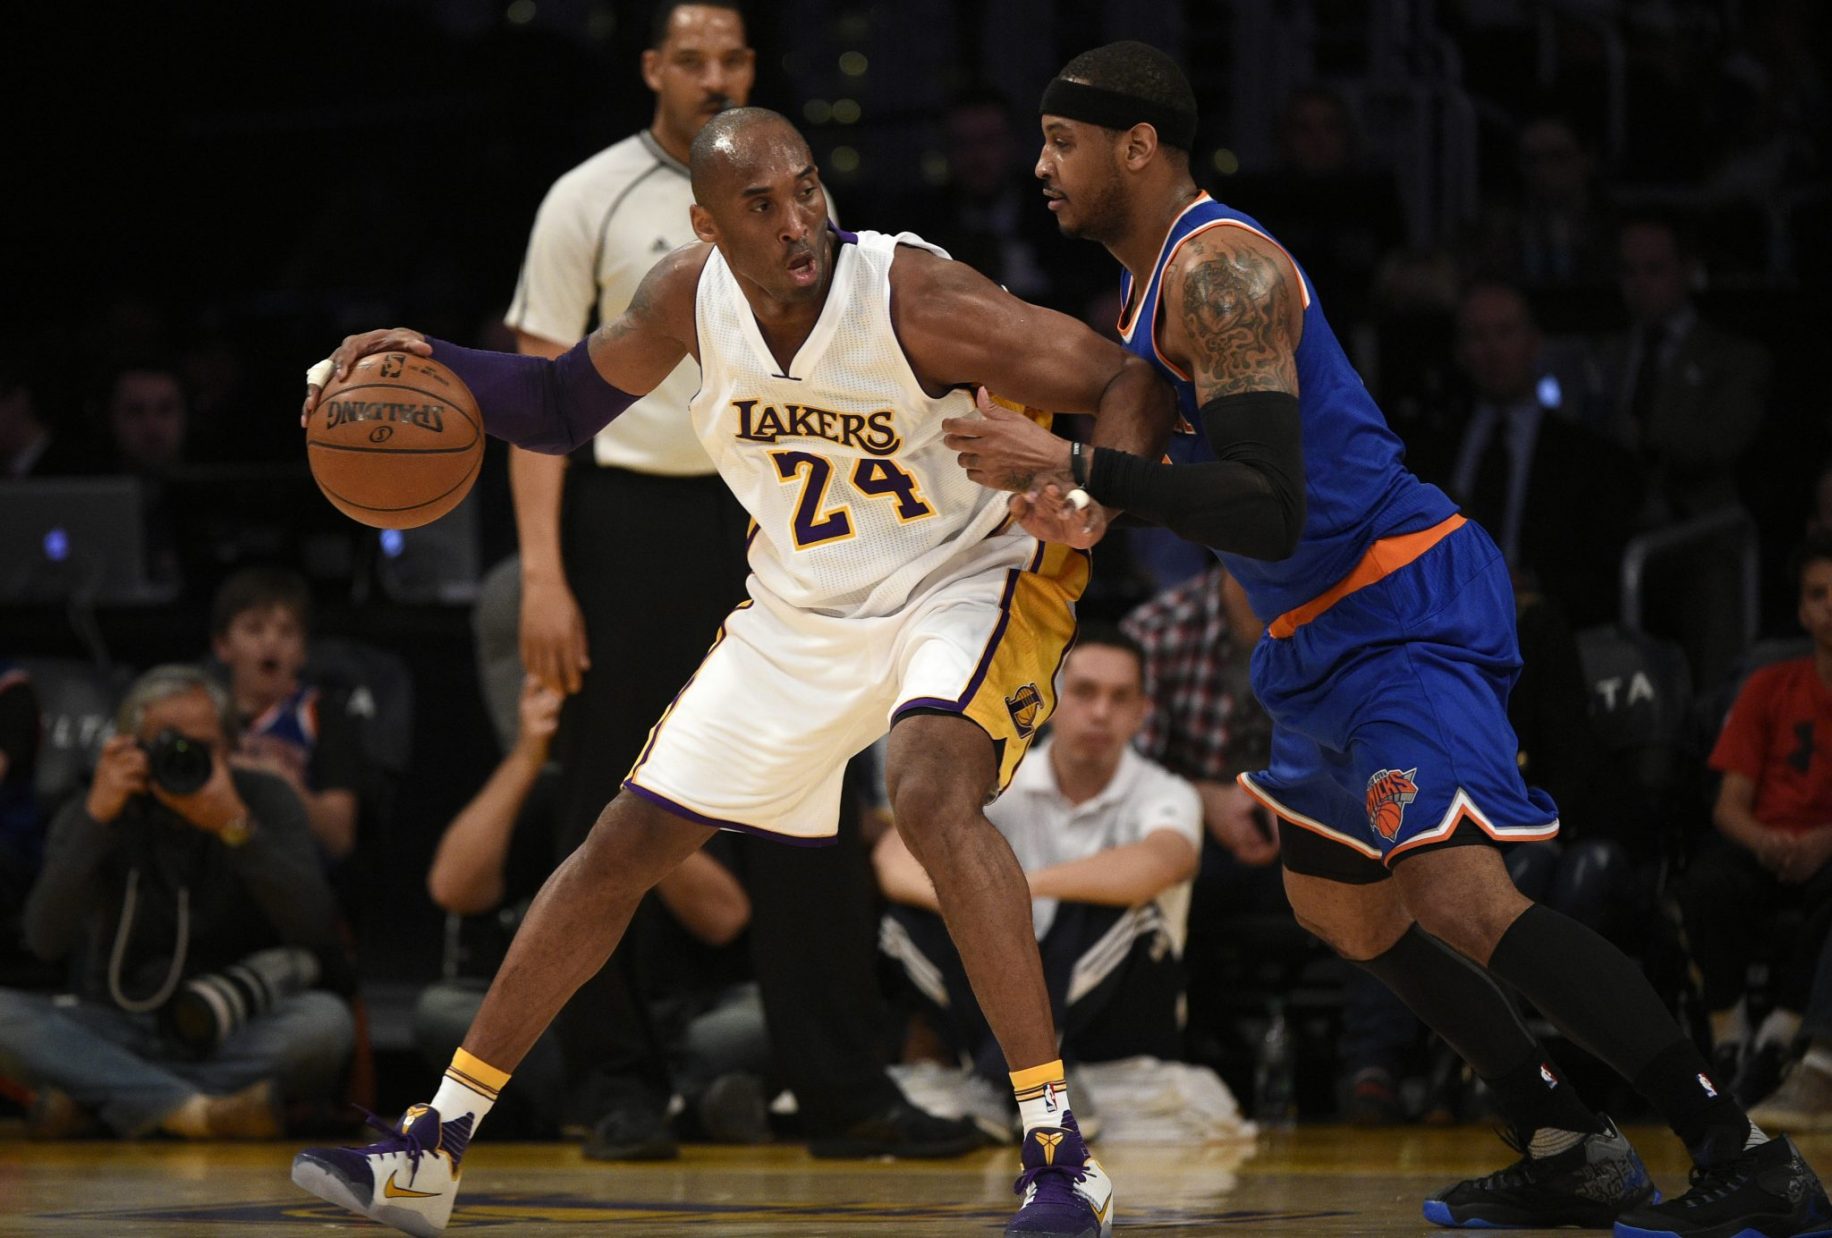 New York Knicks: Carmelo Anthony has reached out to Kobe Bryant regarding Jax 